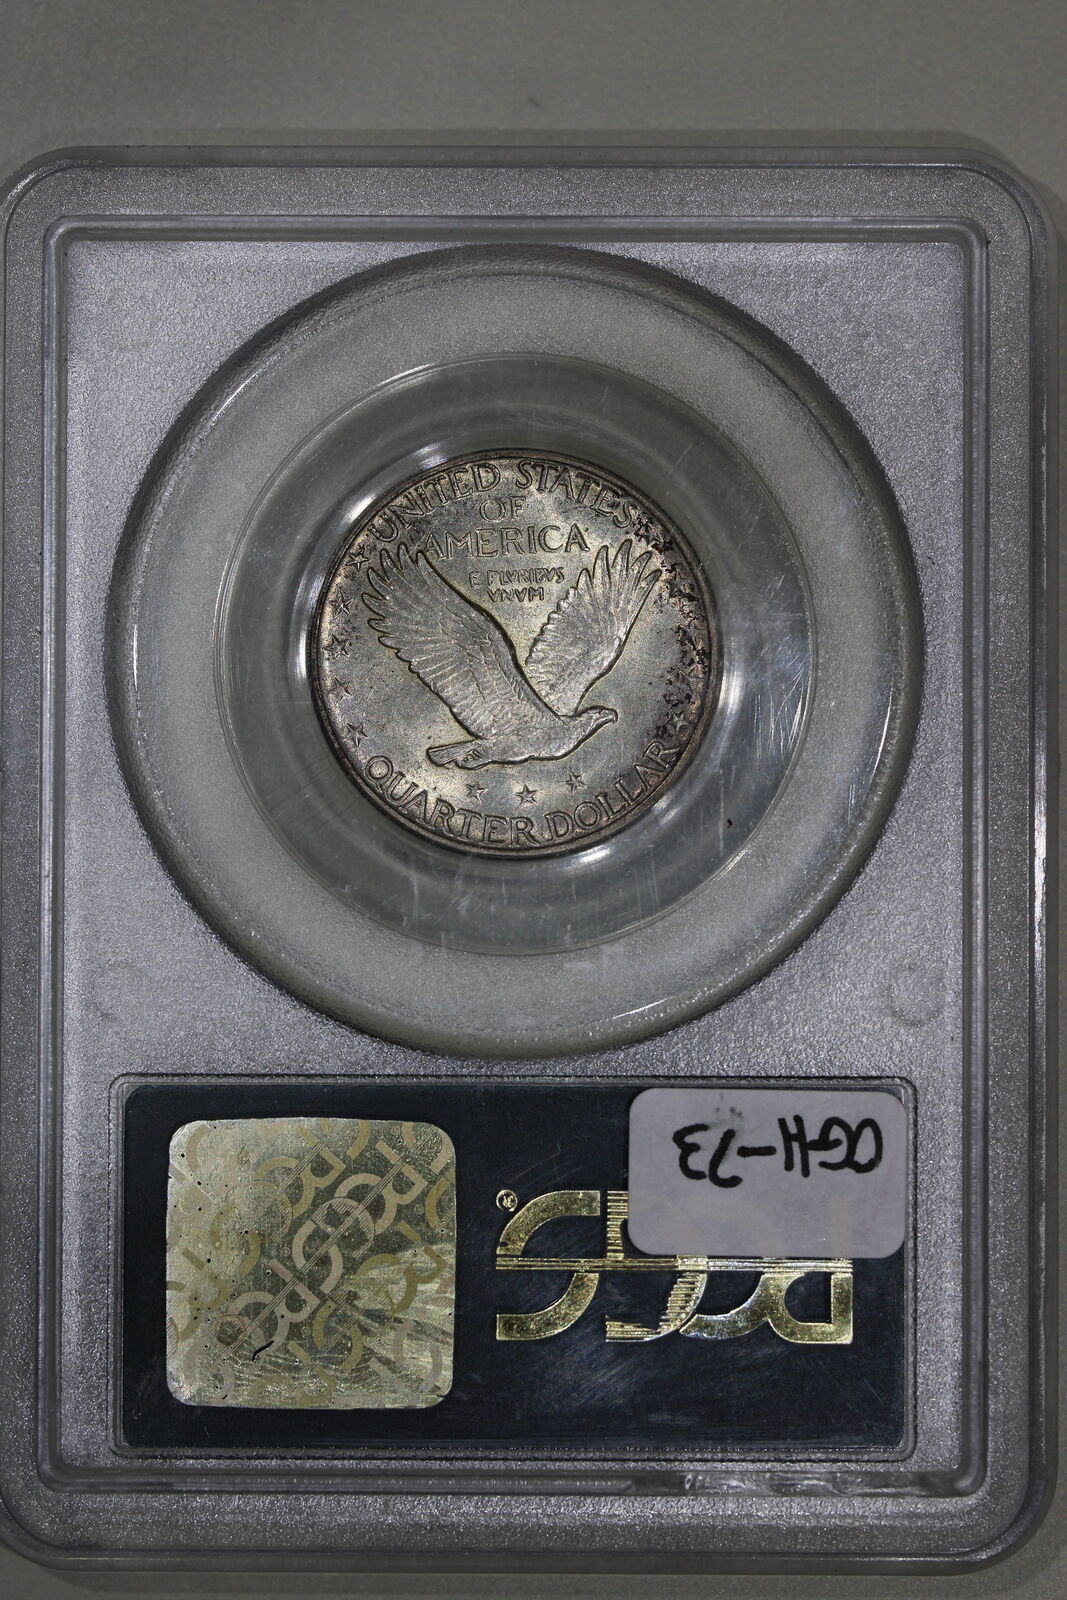 1927 (AU55) Standing Liberty Quarter 25c OGH PCGS Graded Coin